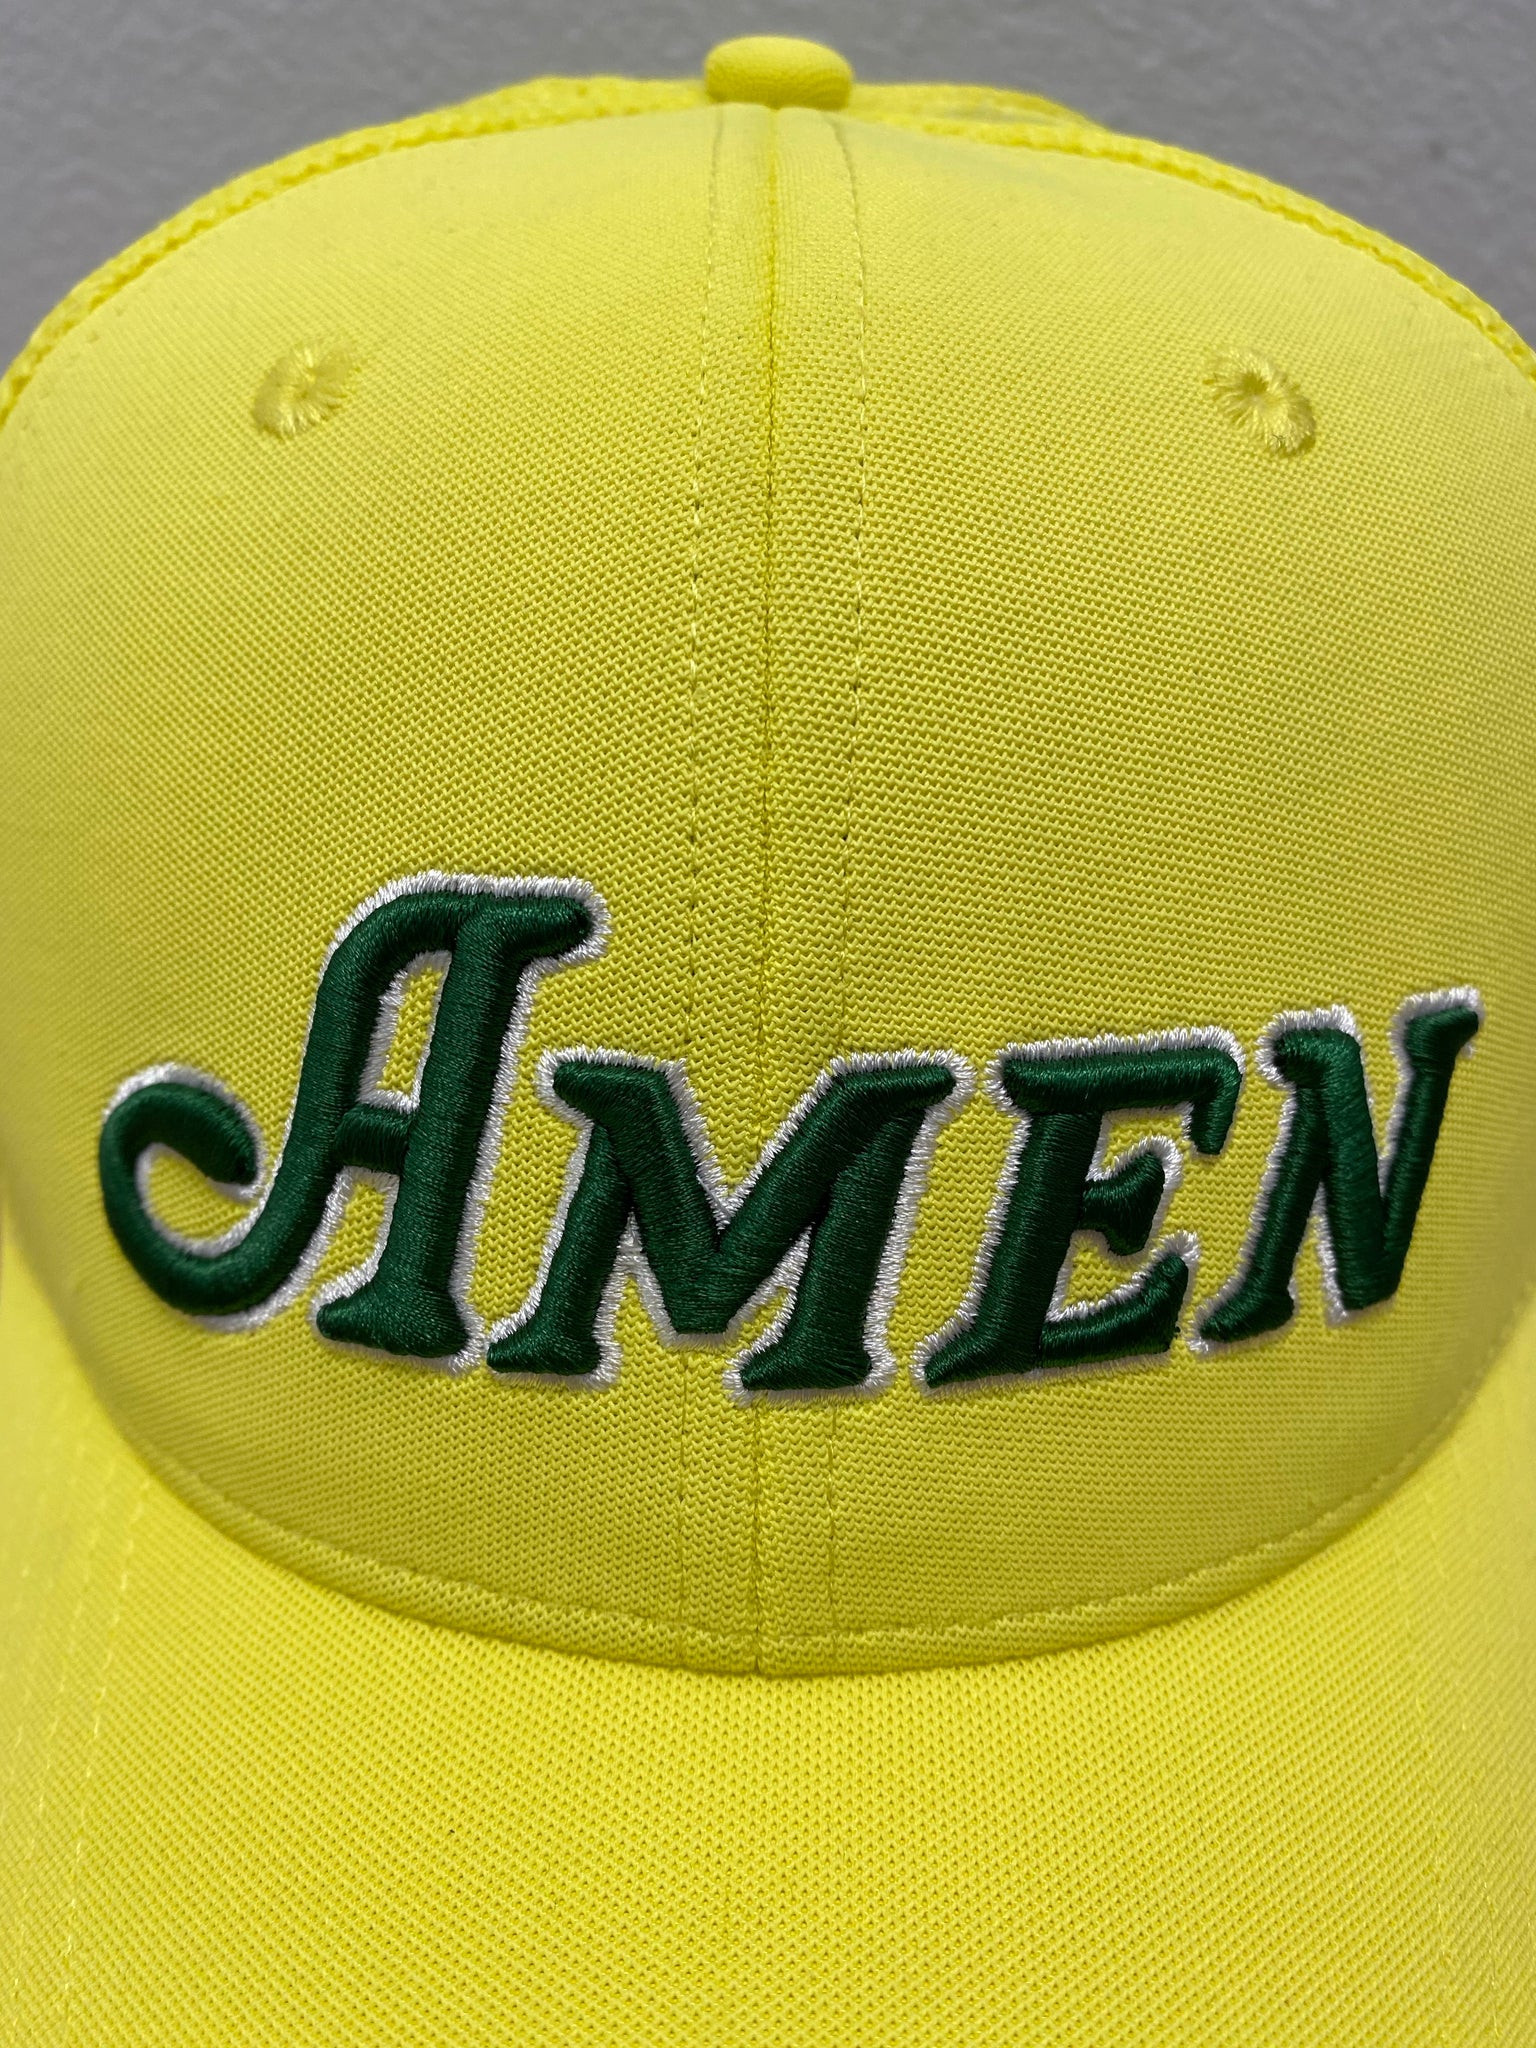 Yellow Curved Bill Amen Mesh Back Hat